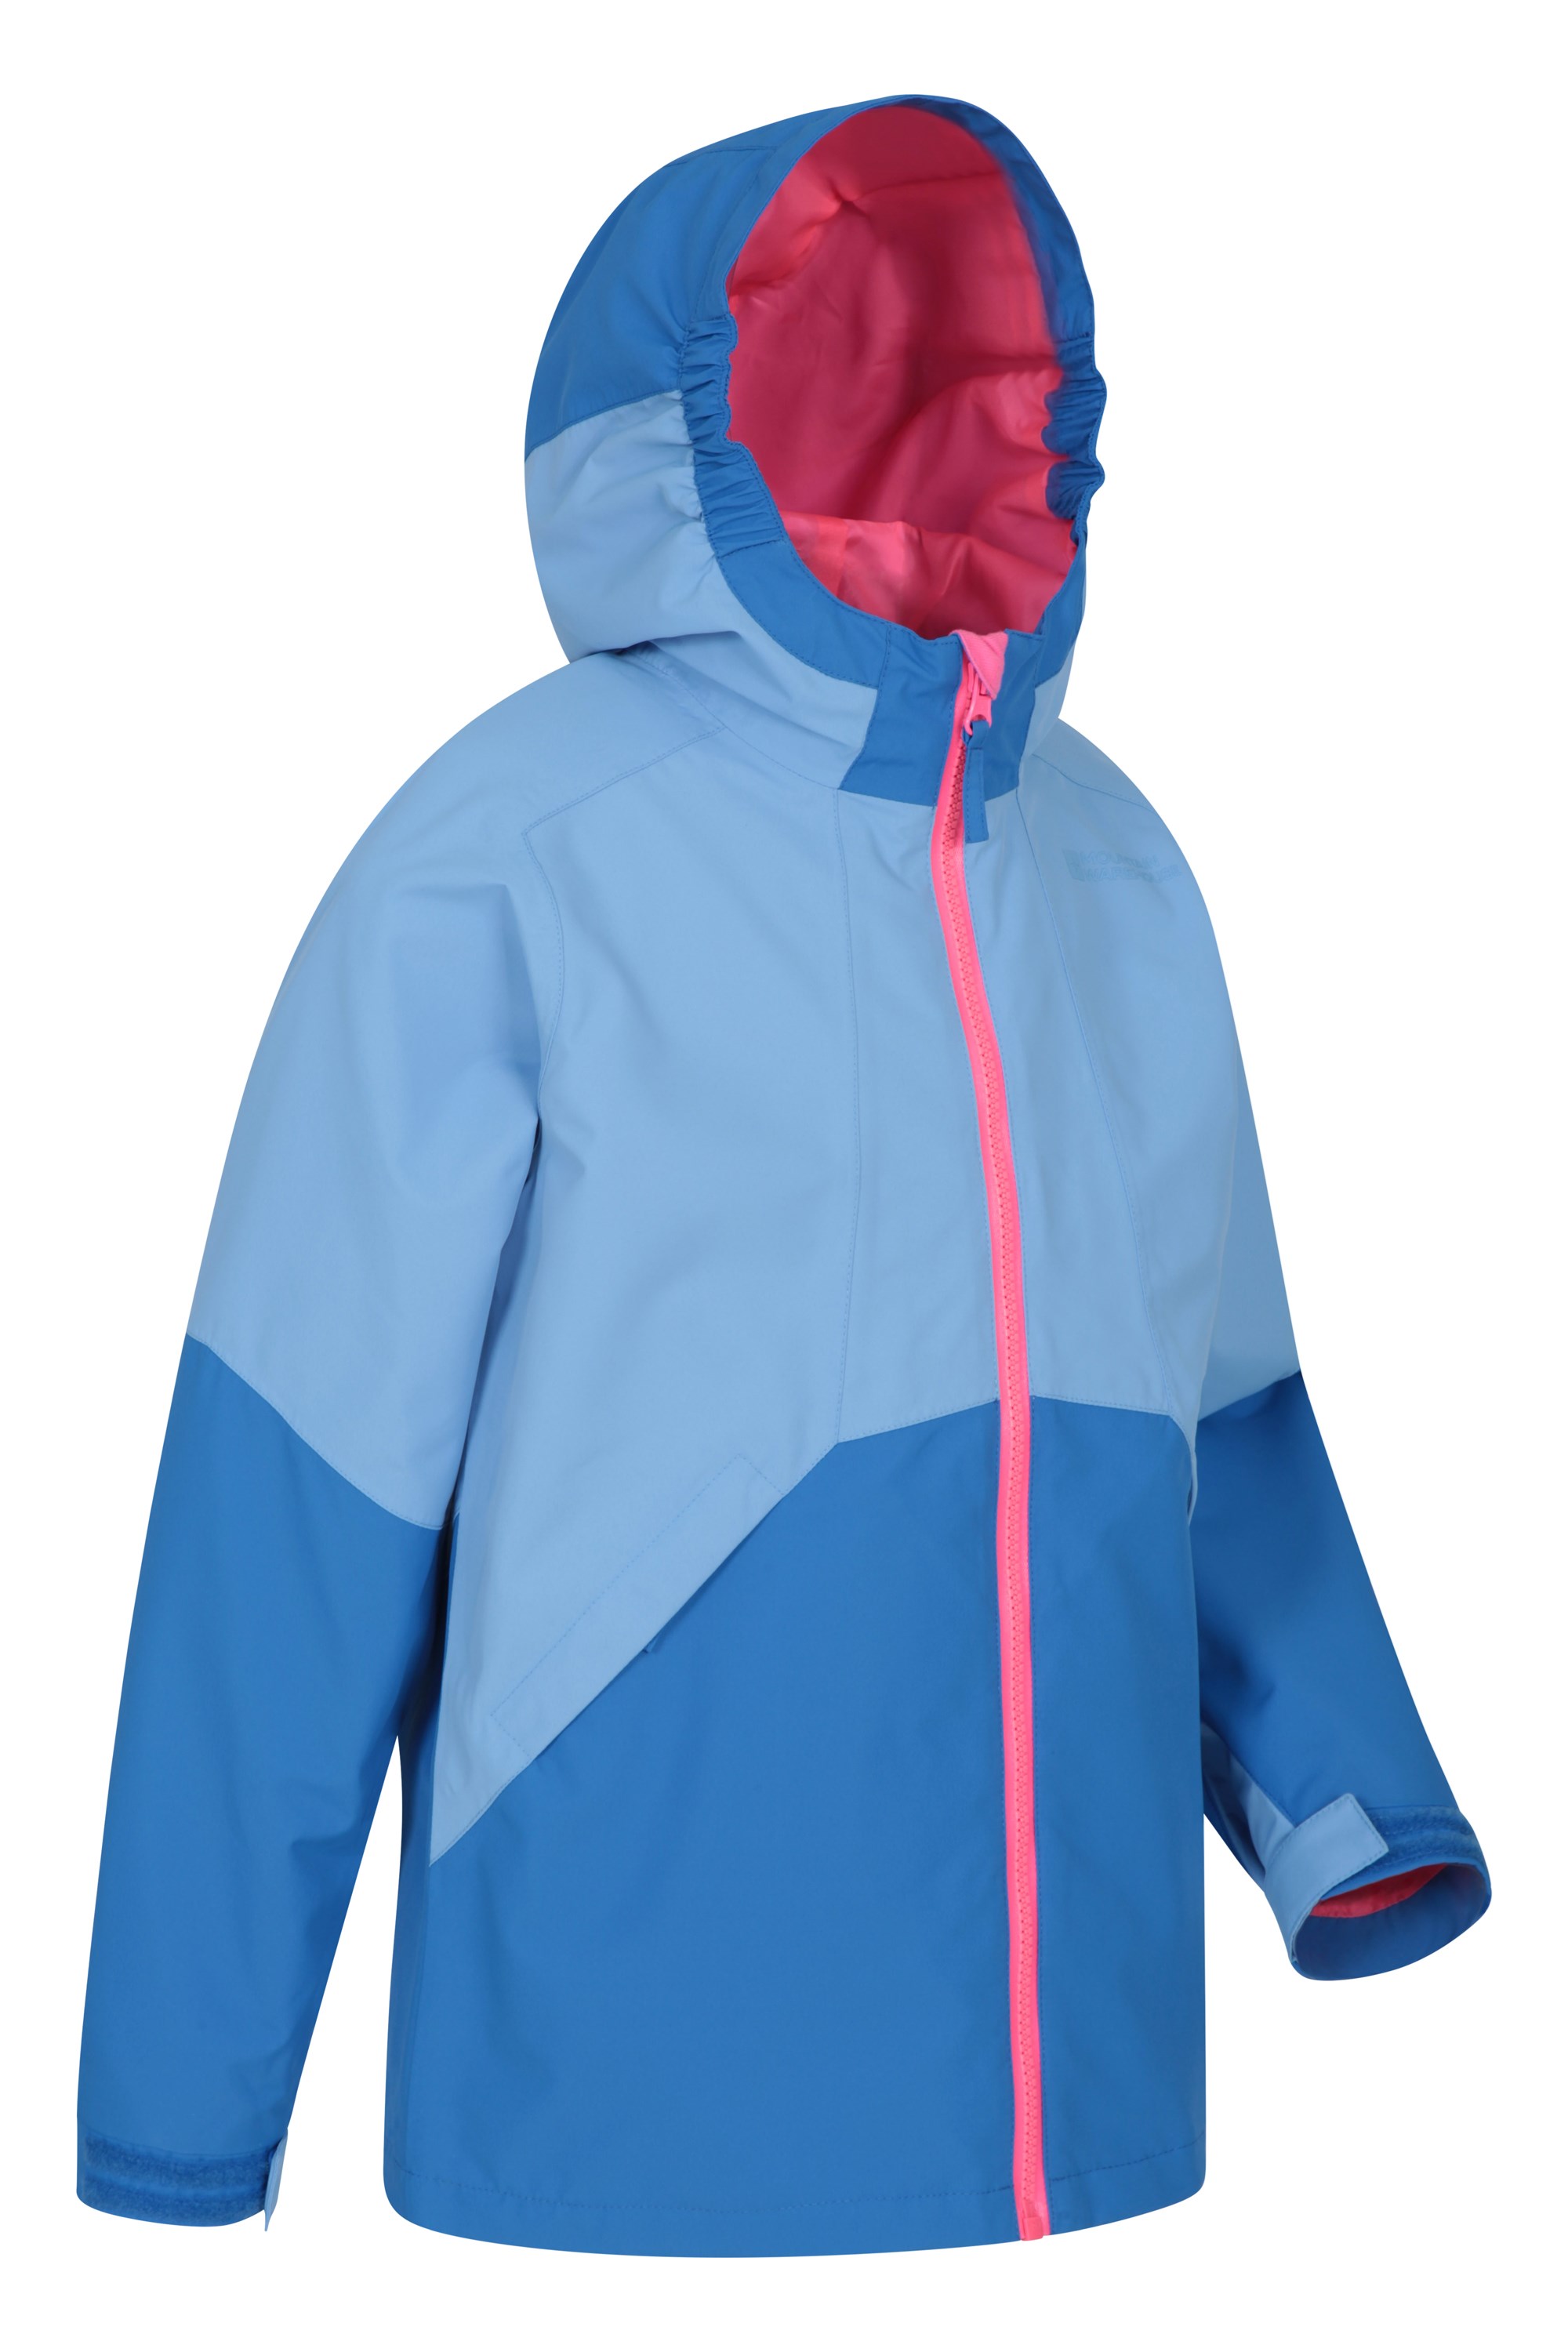 Girls & Boys Rainwear -Ideal for Travelling Wet Weather Lightweight Taped Seams Raincoat Breathable Mountain Warehouse Torrent Kids Waterproof Rain Jacket 